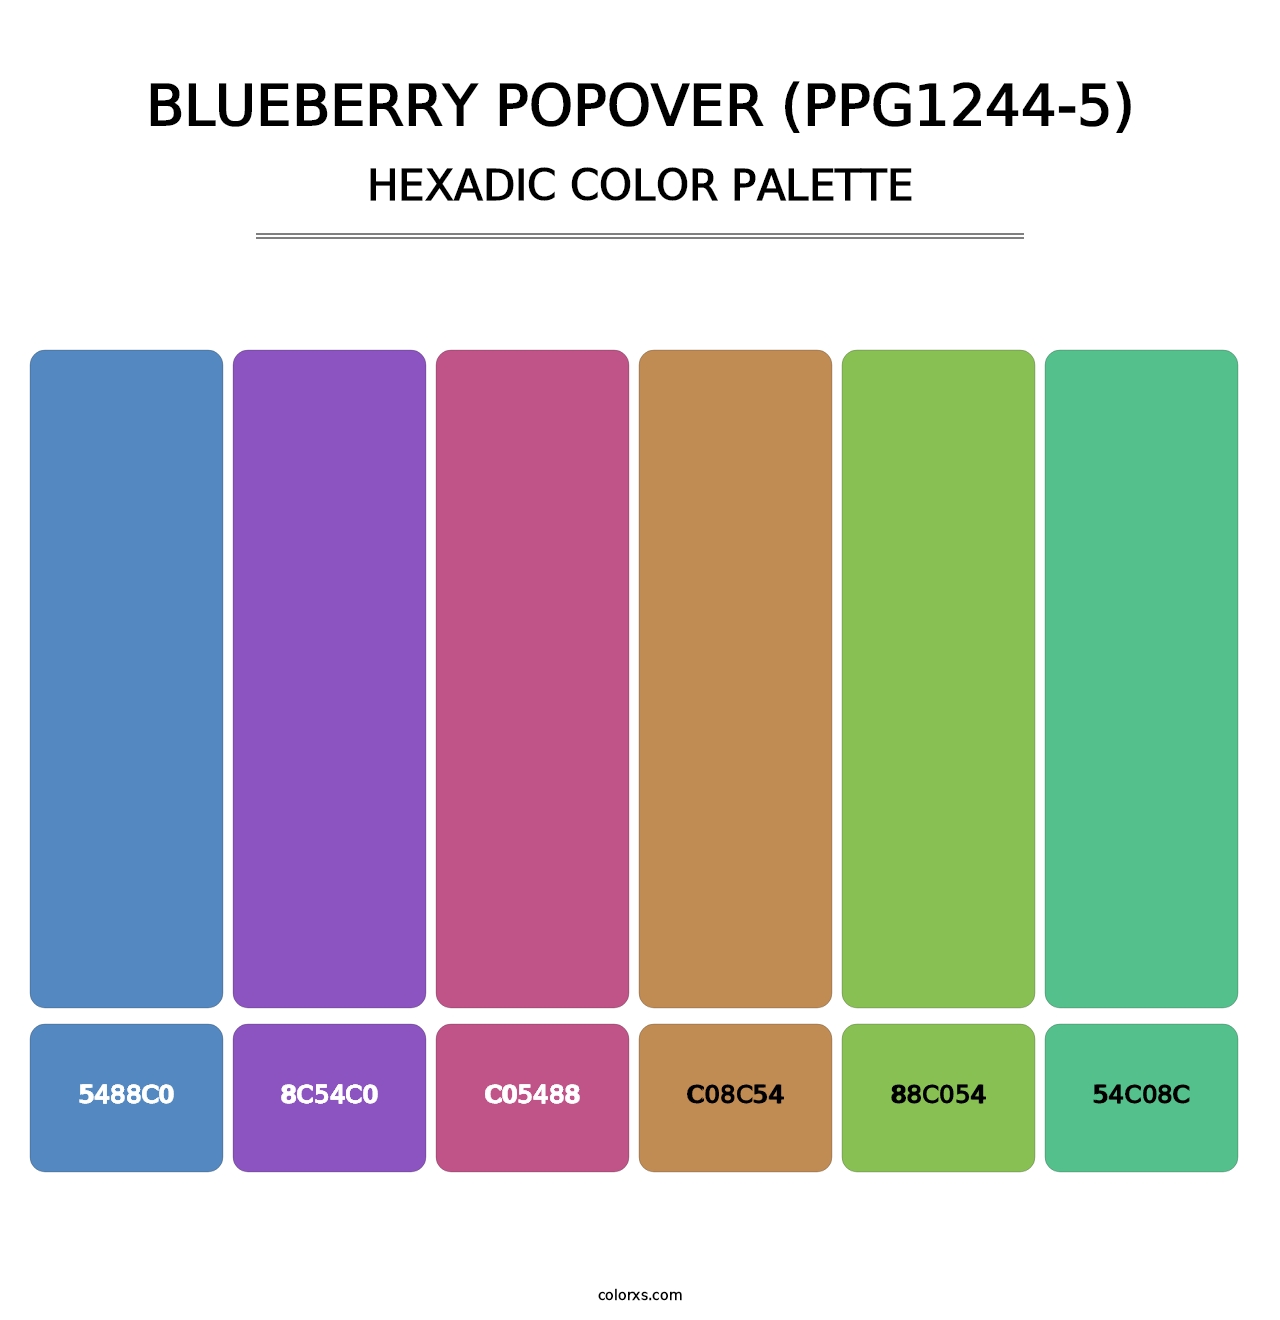 Blueberry Popover (PPG1244-5) - Hexadic Color Palette